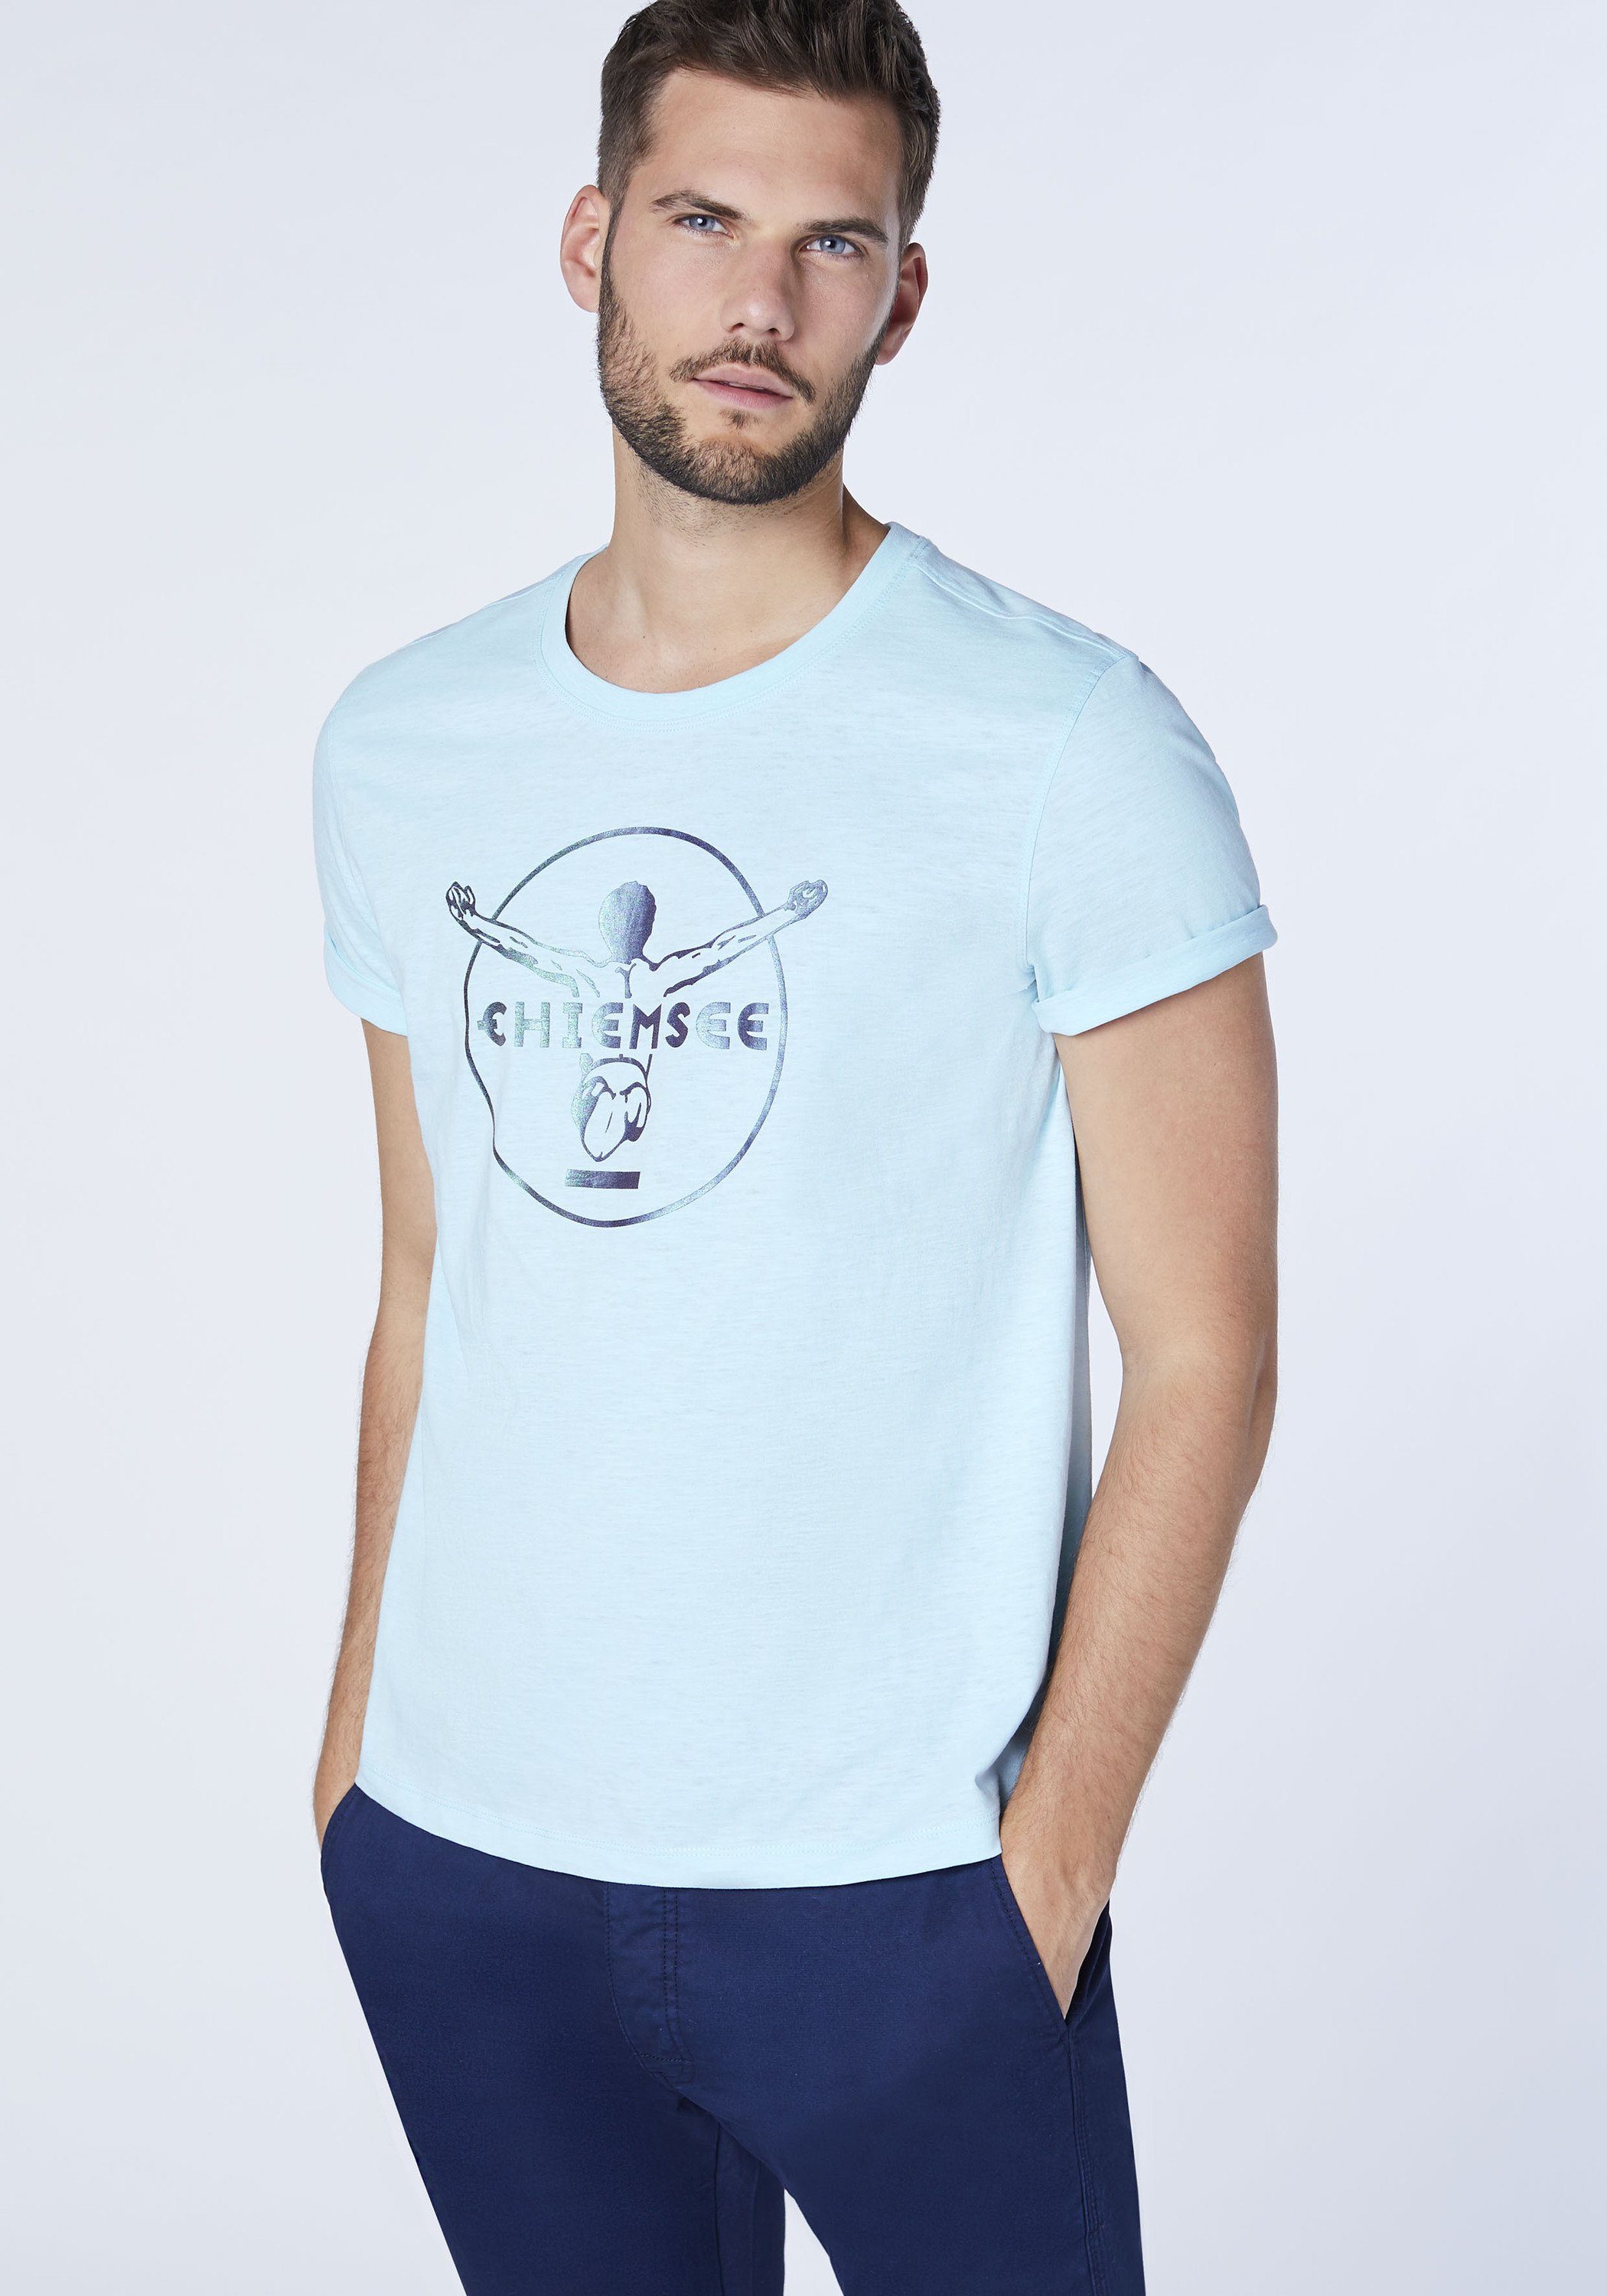 Label-Symbol Coryda Chiemsee T-Shirt gedrucktem Print-Shirt 1 mit Blue